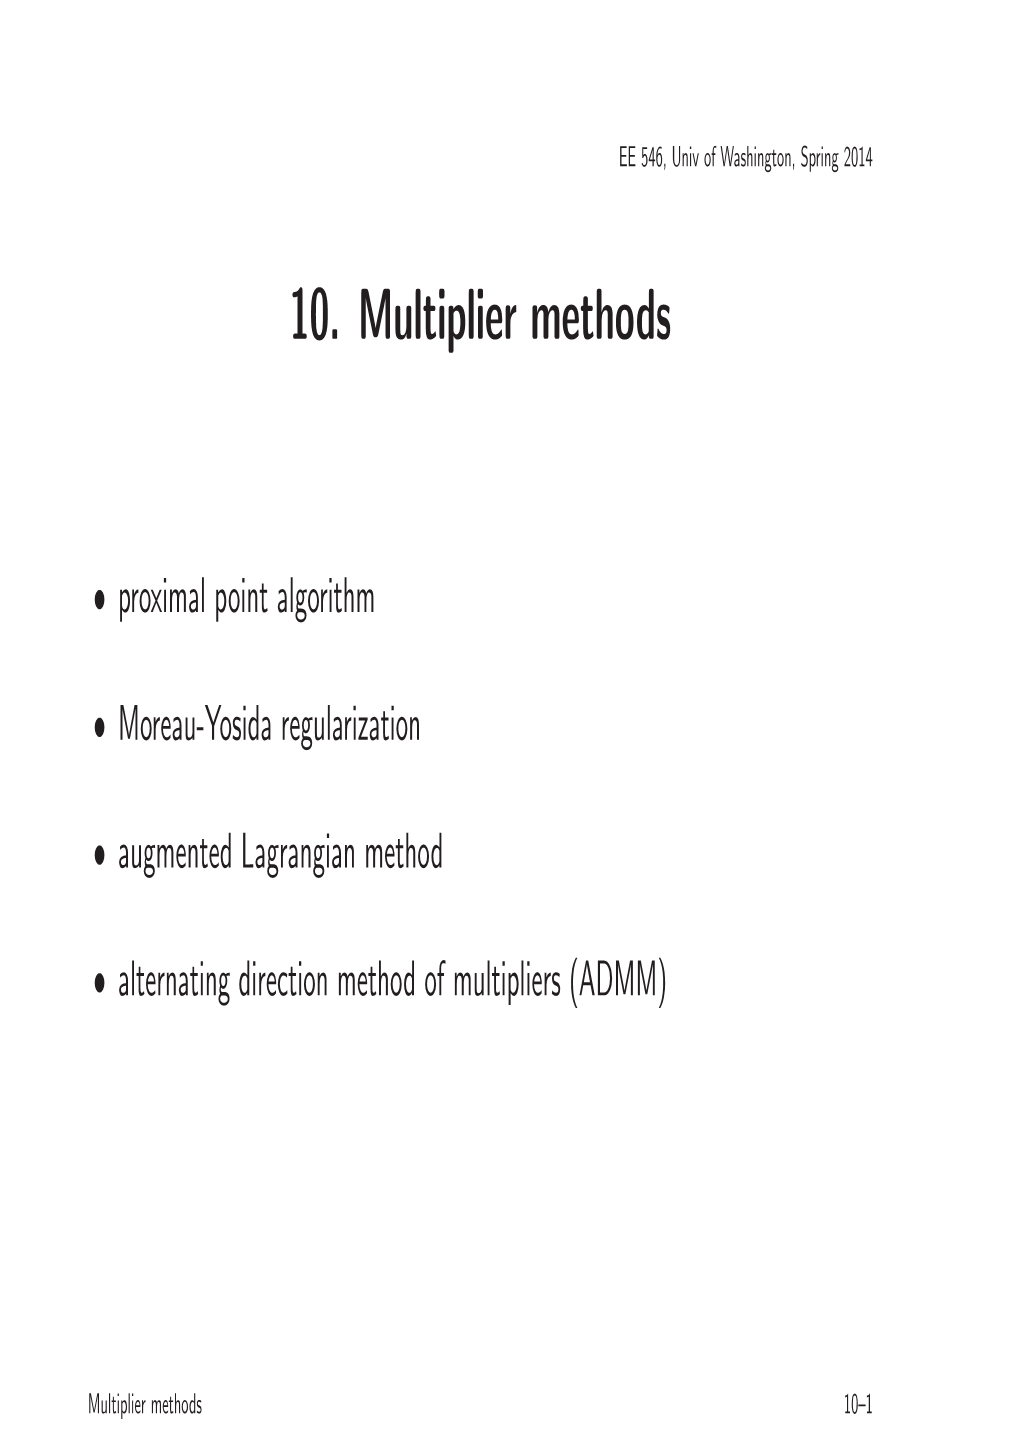 10. Augmented Lagrangian, Alternating Direction Multiplier Method